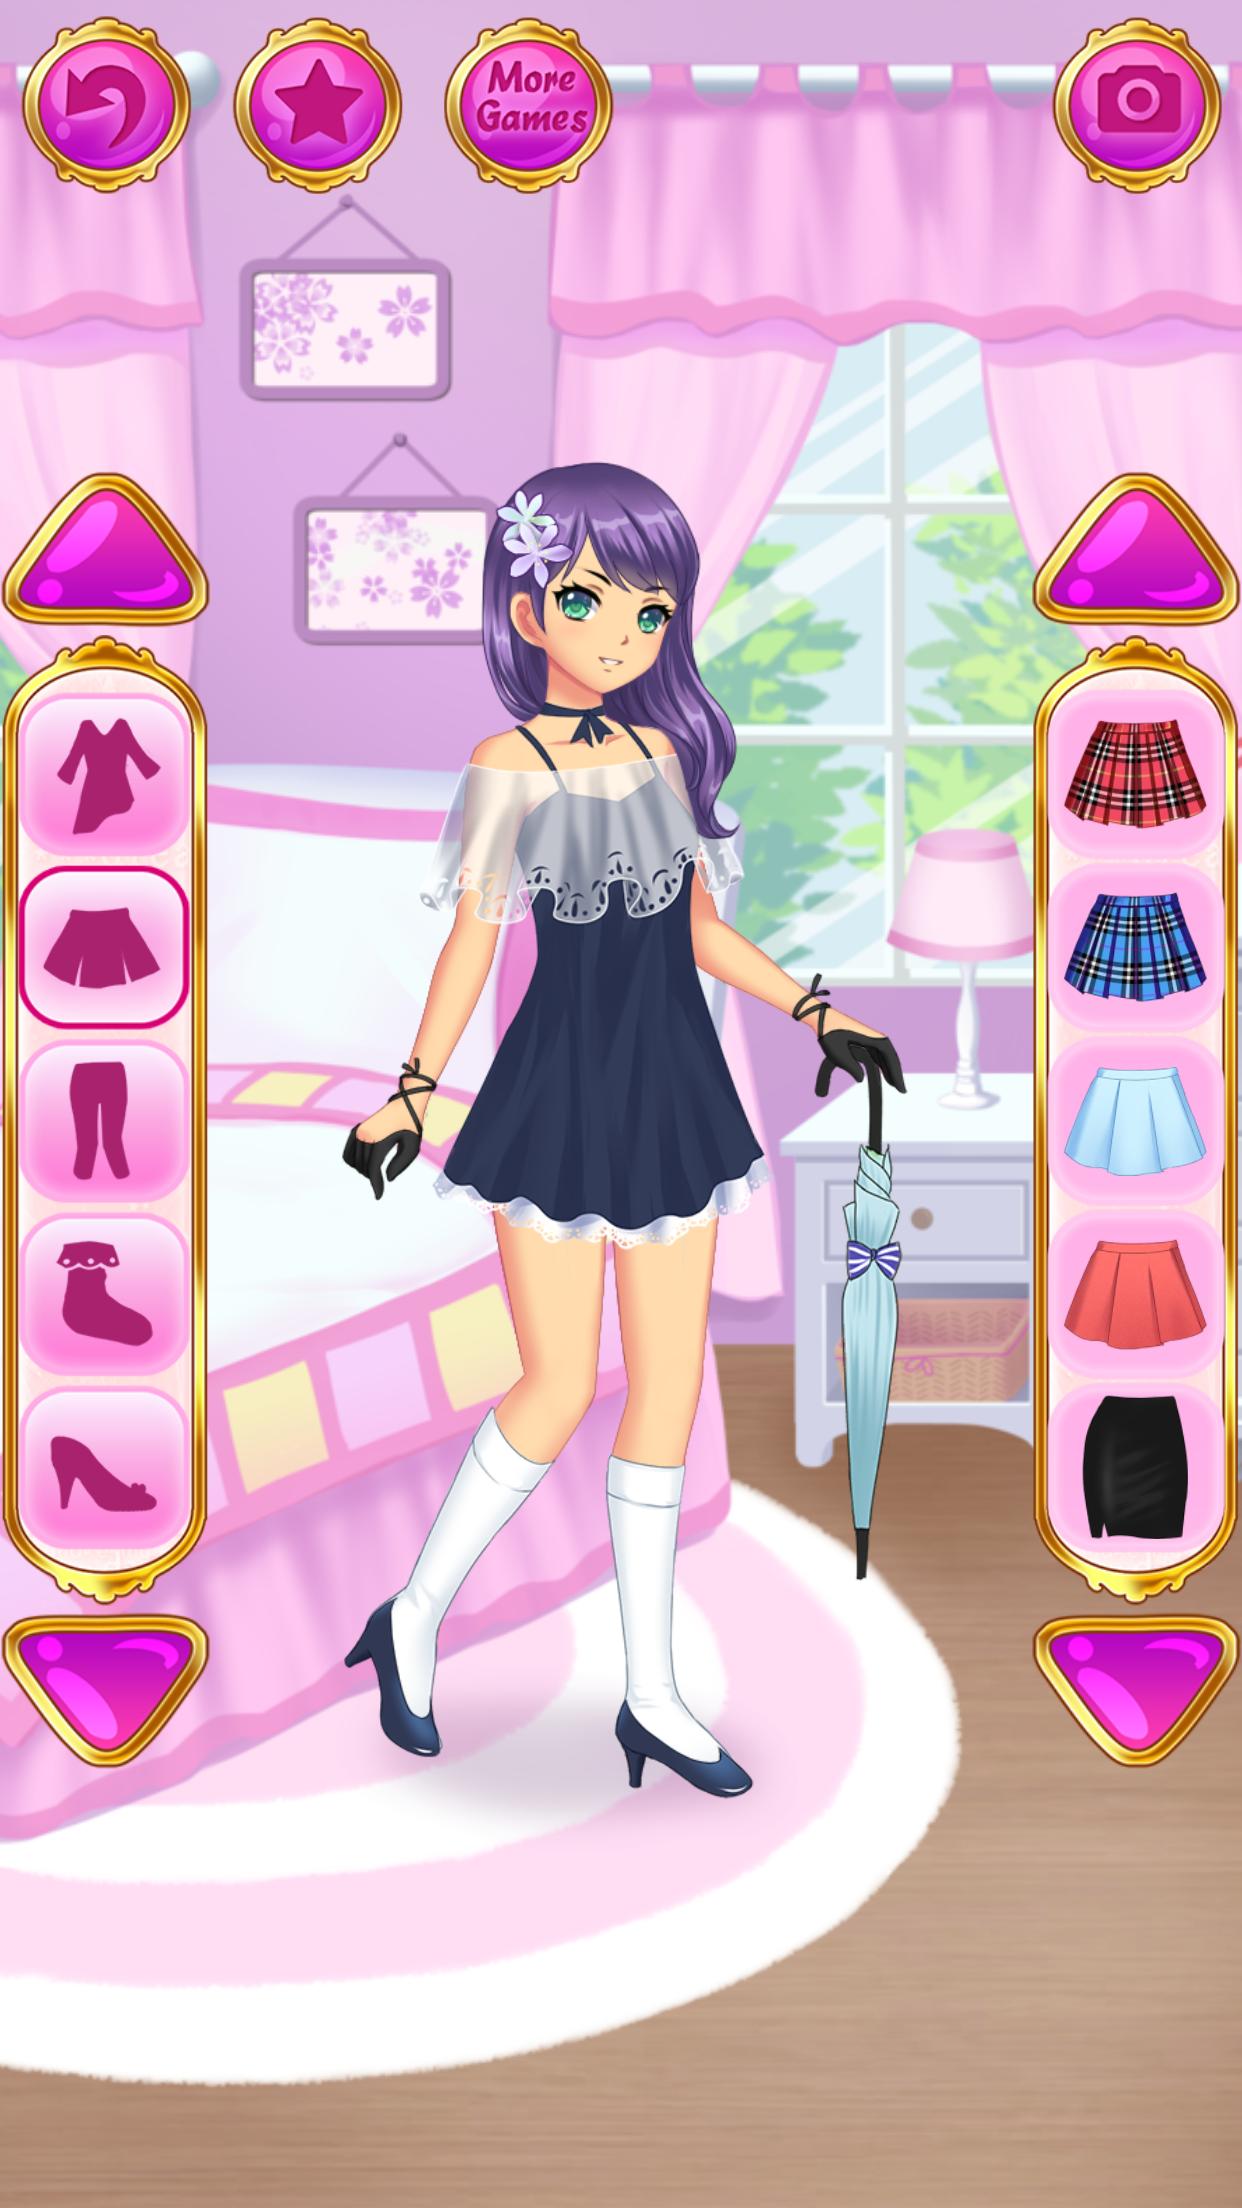 Anime Dress Up Games For Girls 1.1.9 Screenshot 16